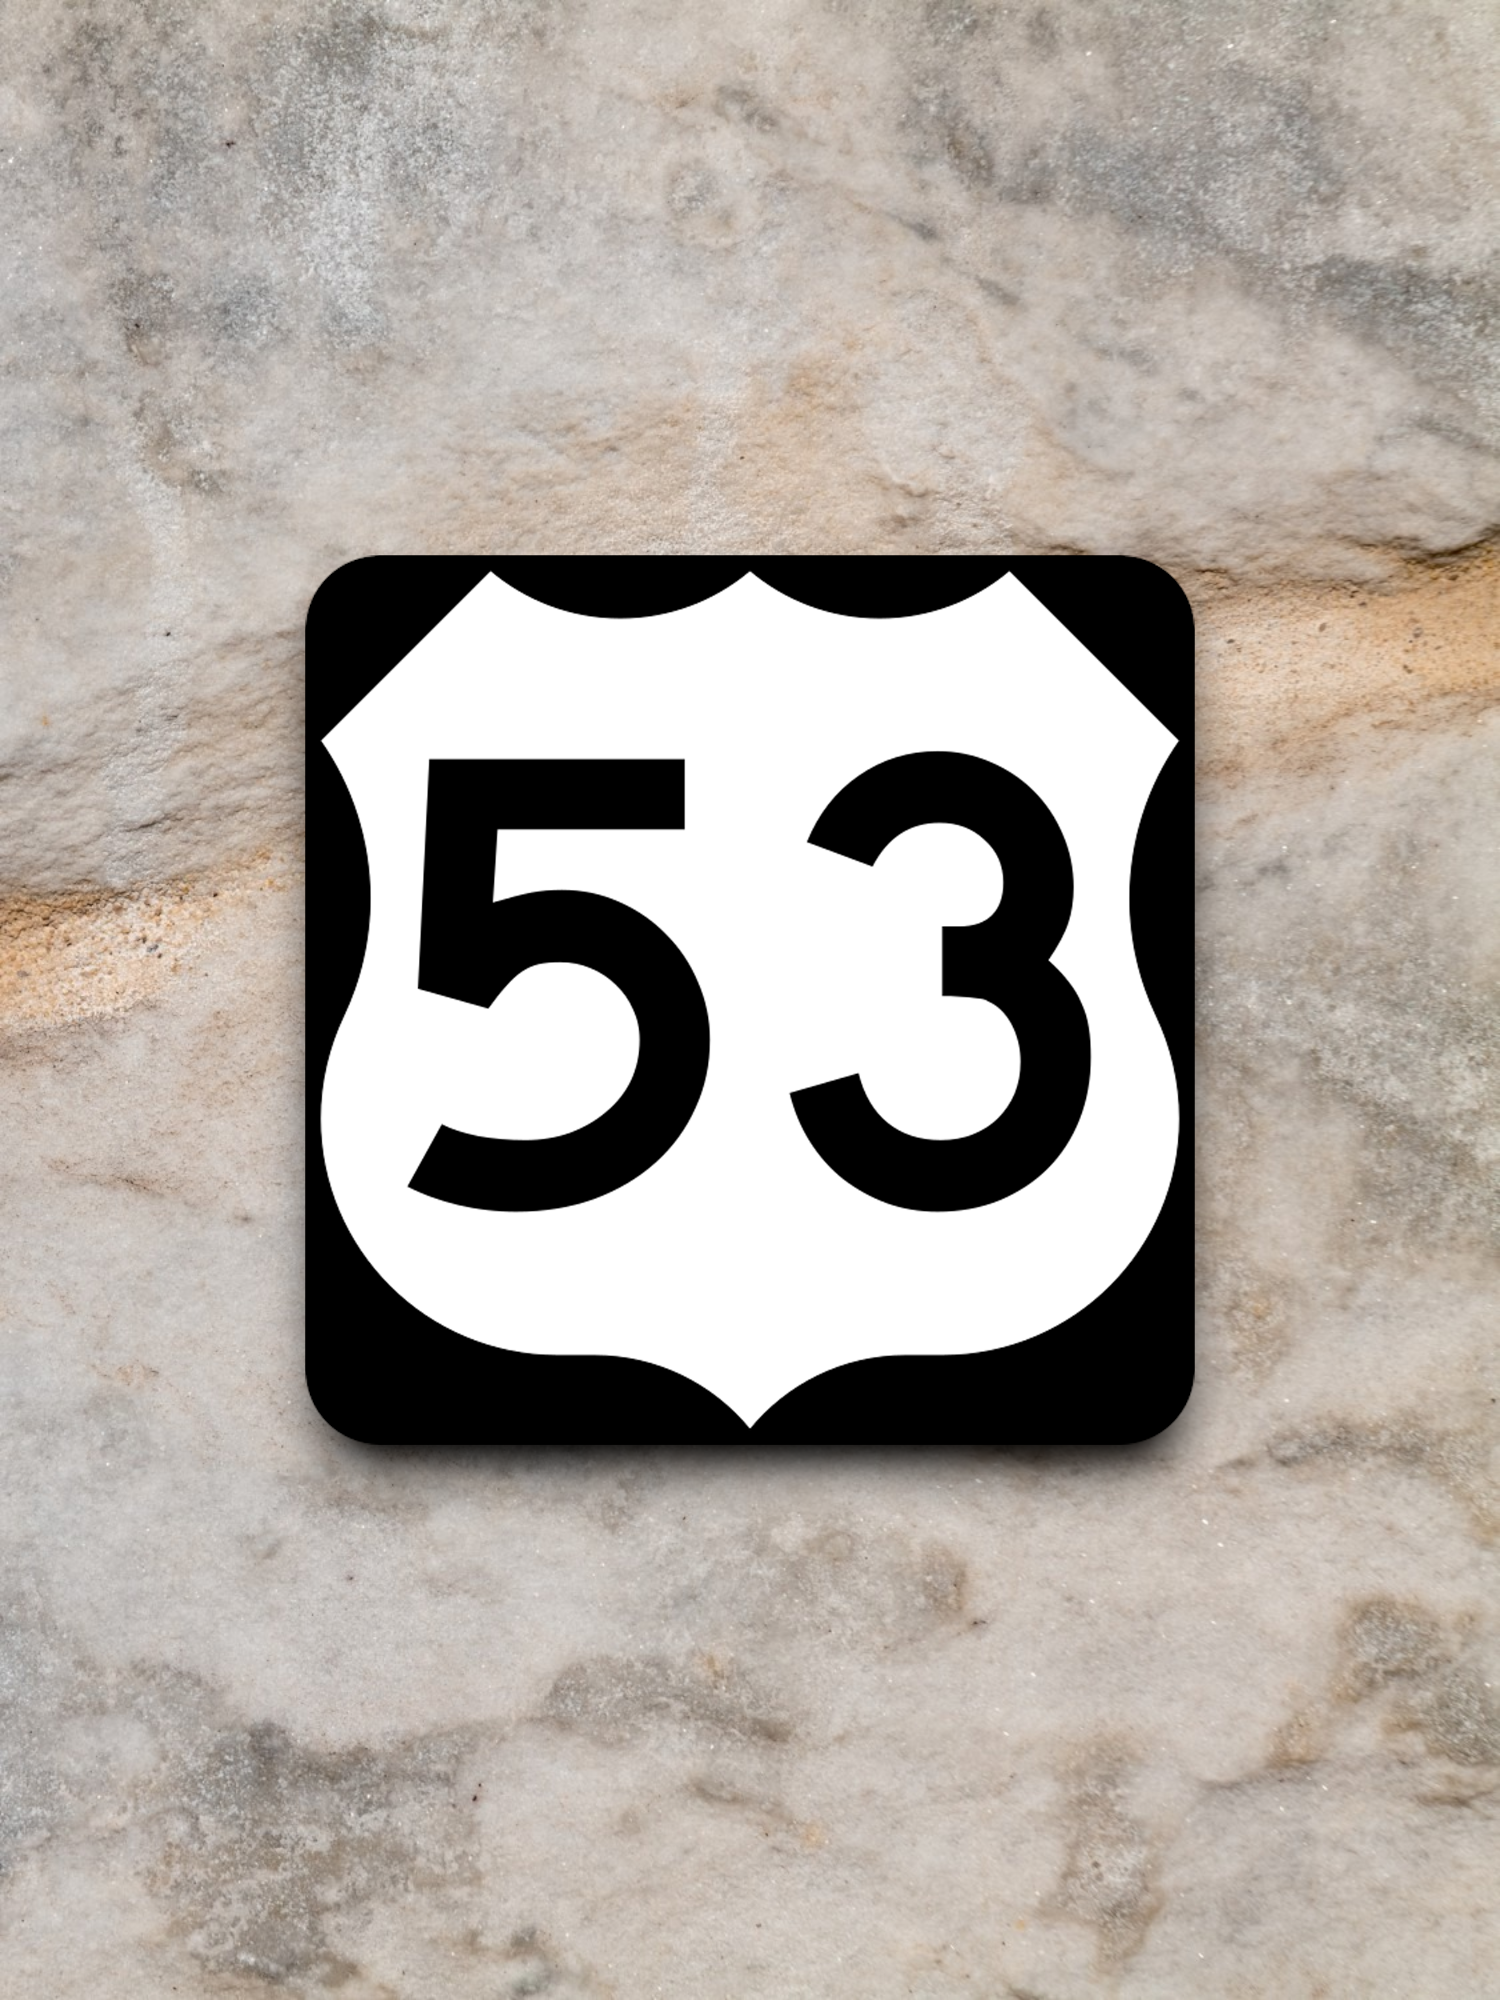 U.S. Route 53 Road Sign Sticker